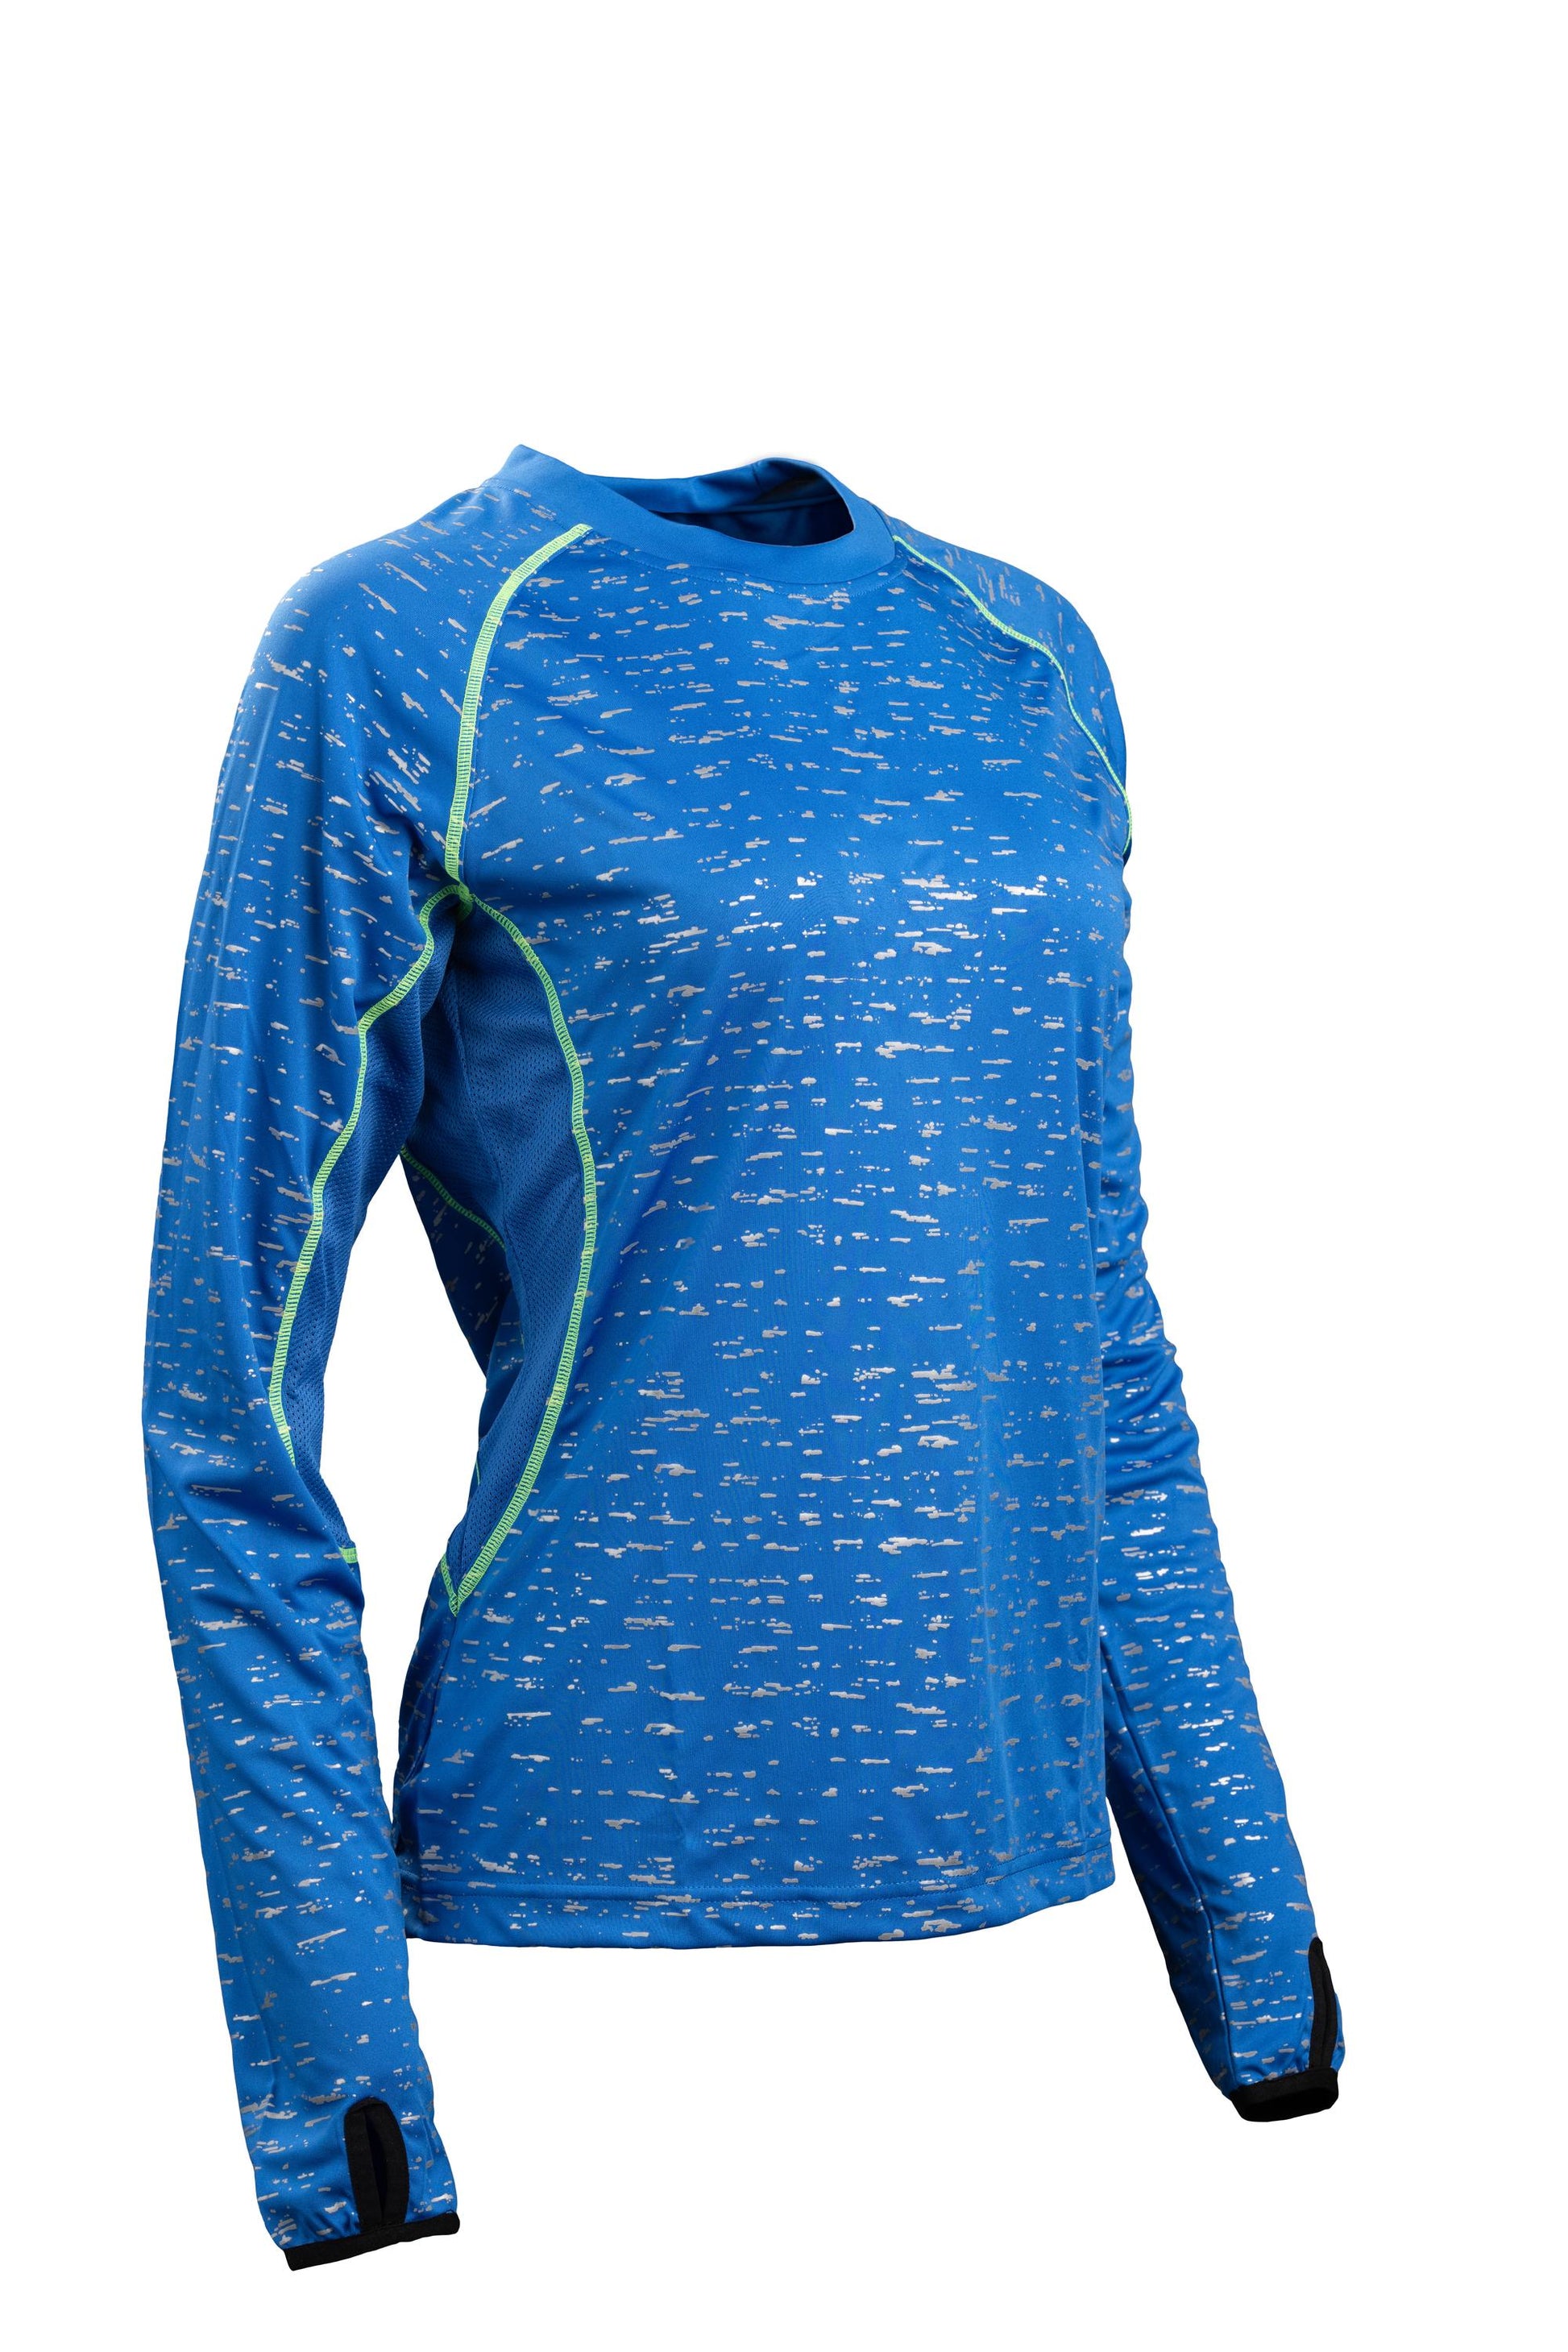 Women’s Blue Long Sleeve WildSpark™ Athletic Shirt